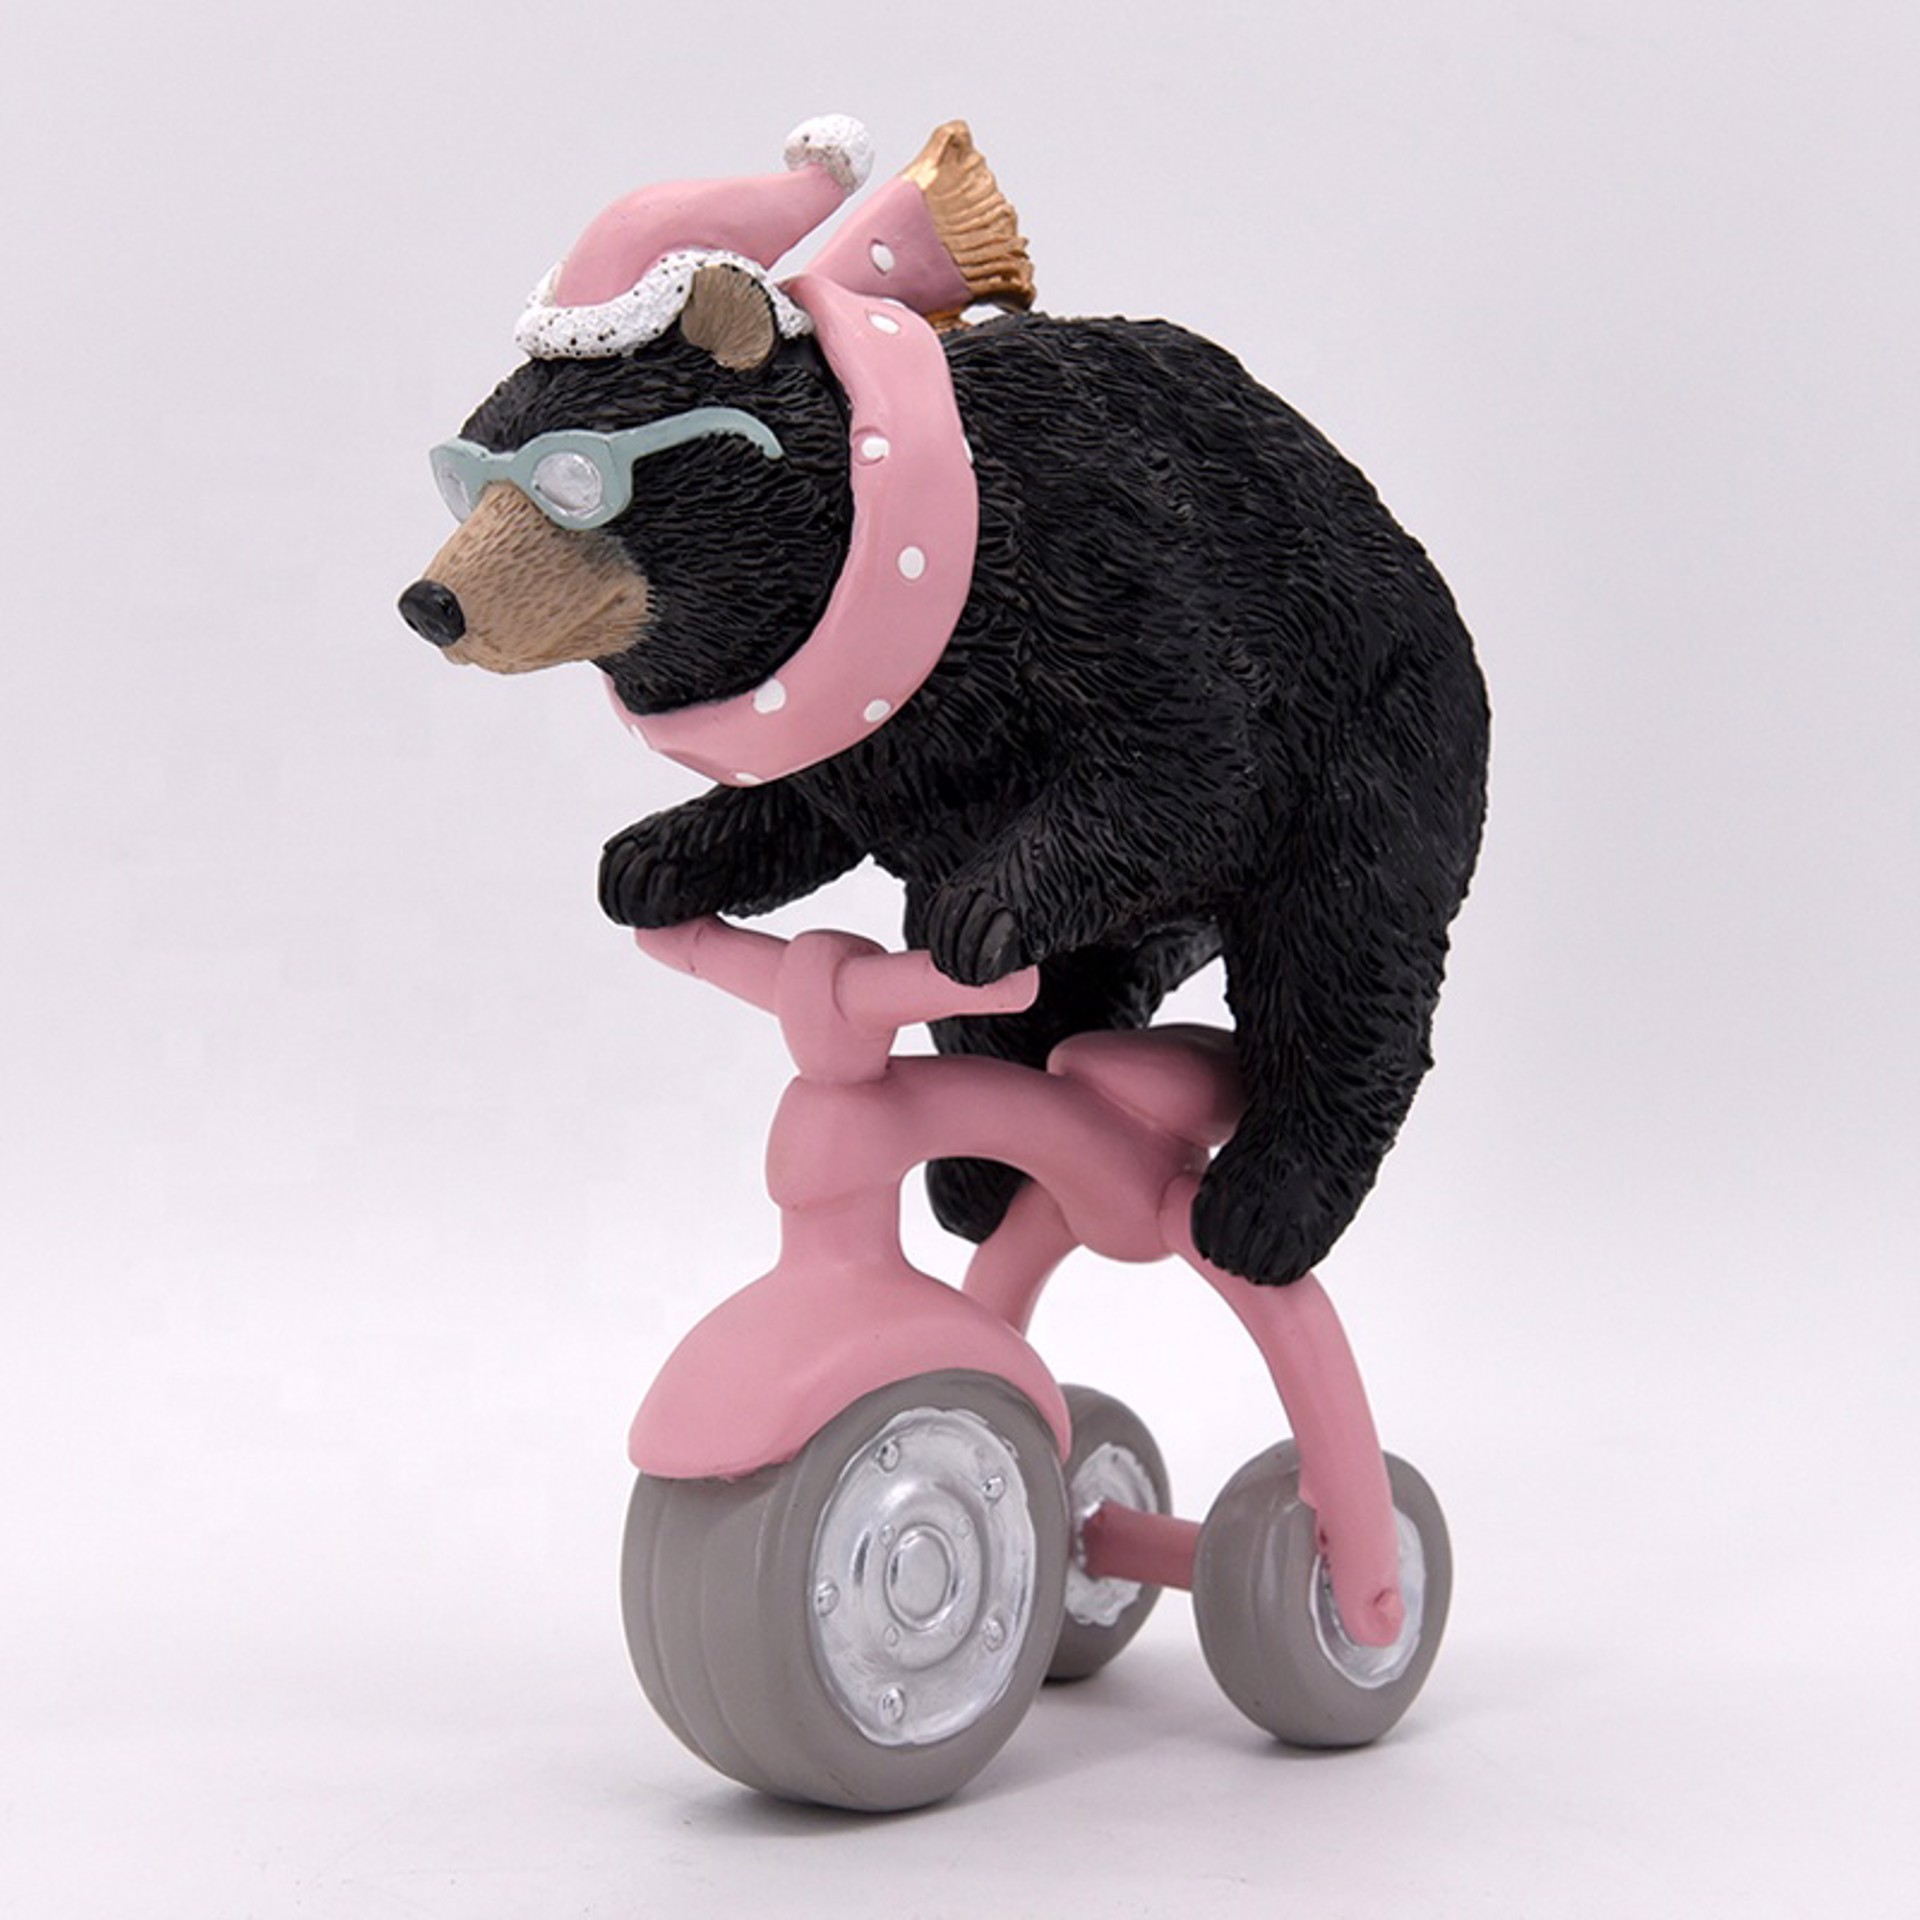 "Bear on the Bicycle" by EBFA Studio